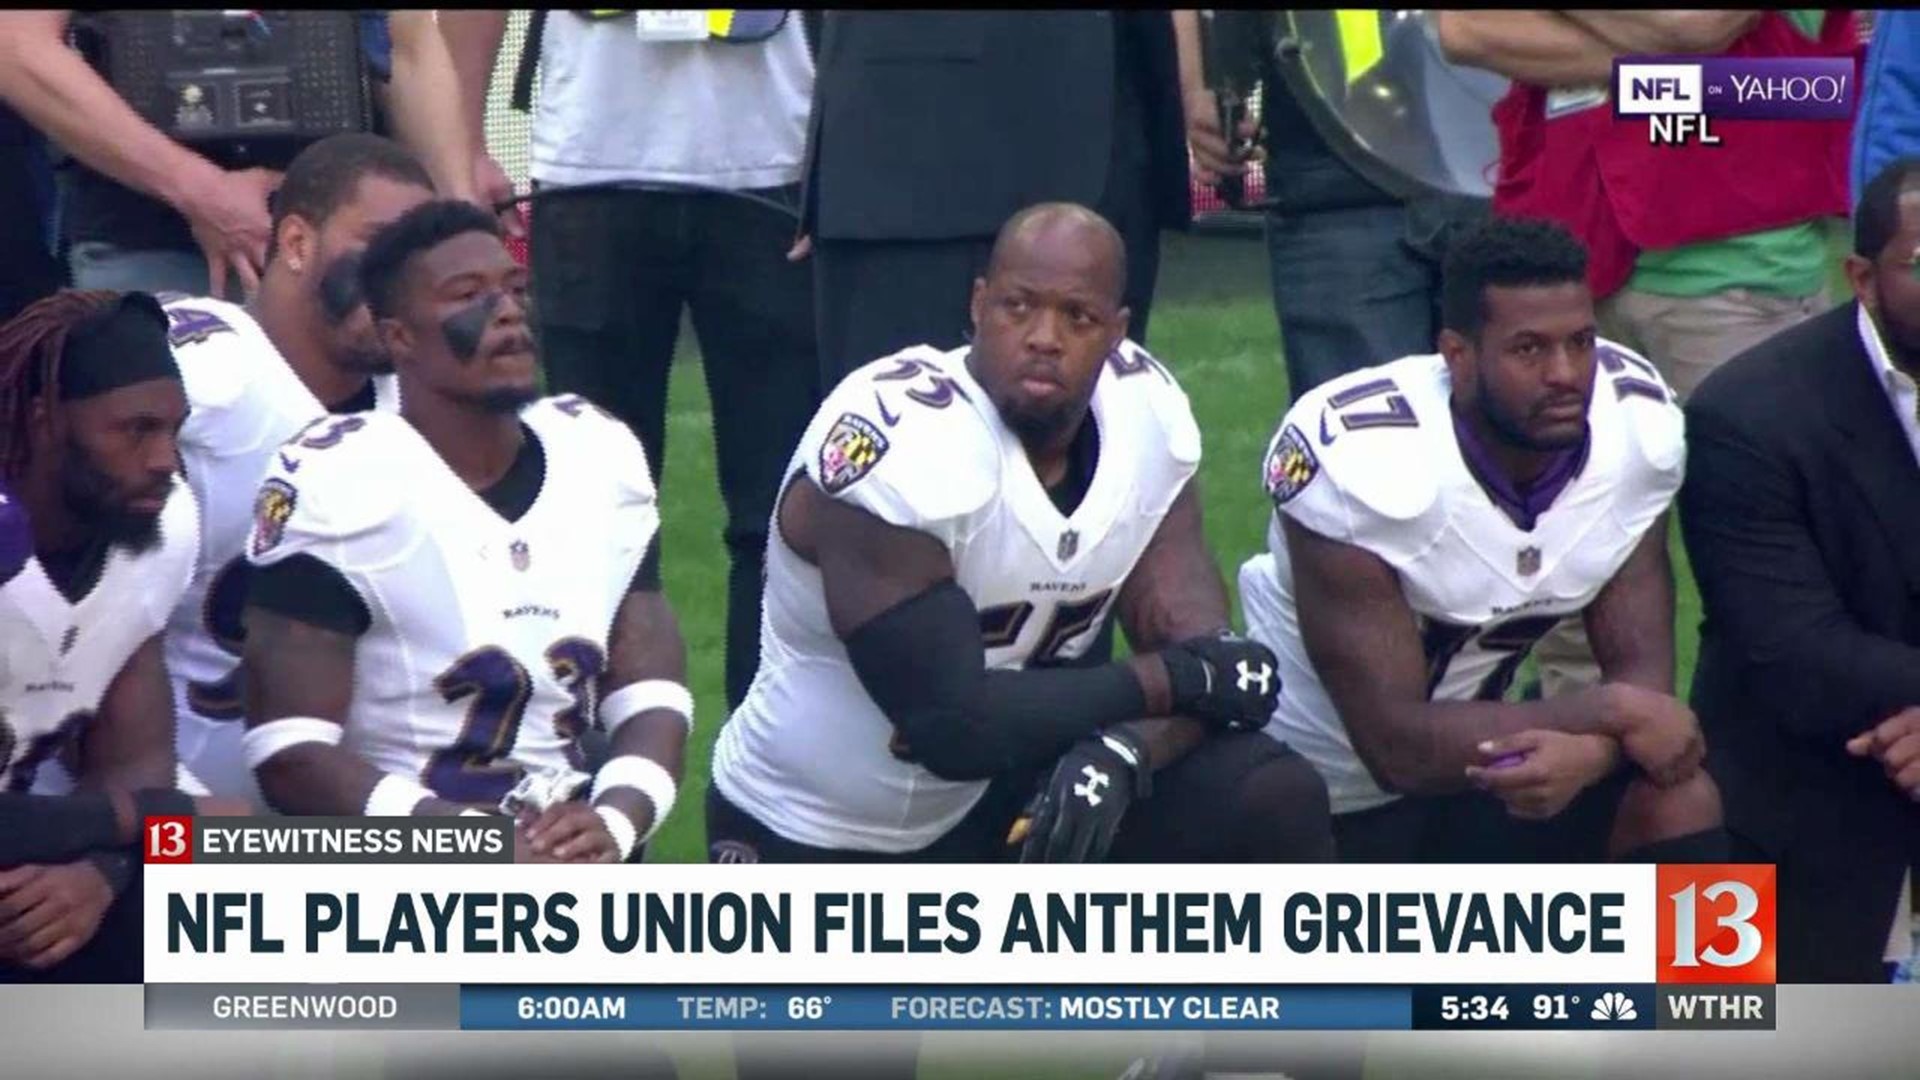 NFL players union files anthem grievance